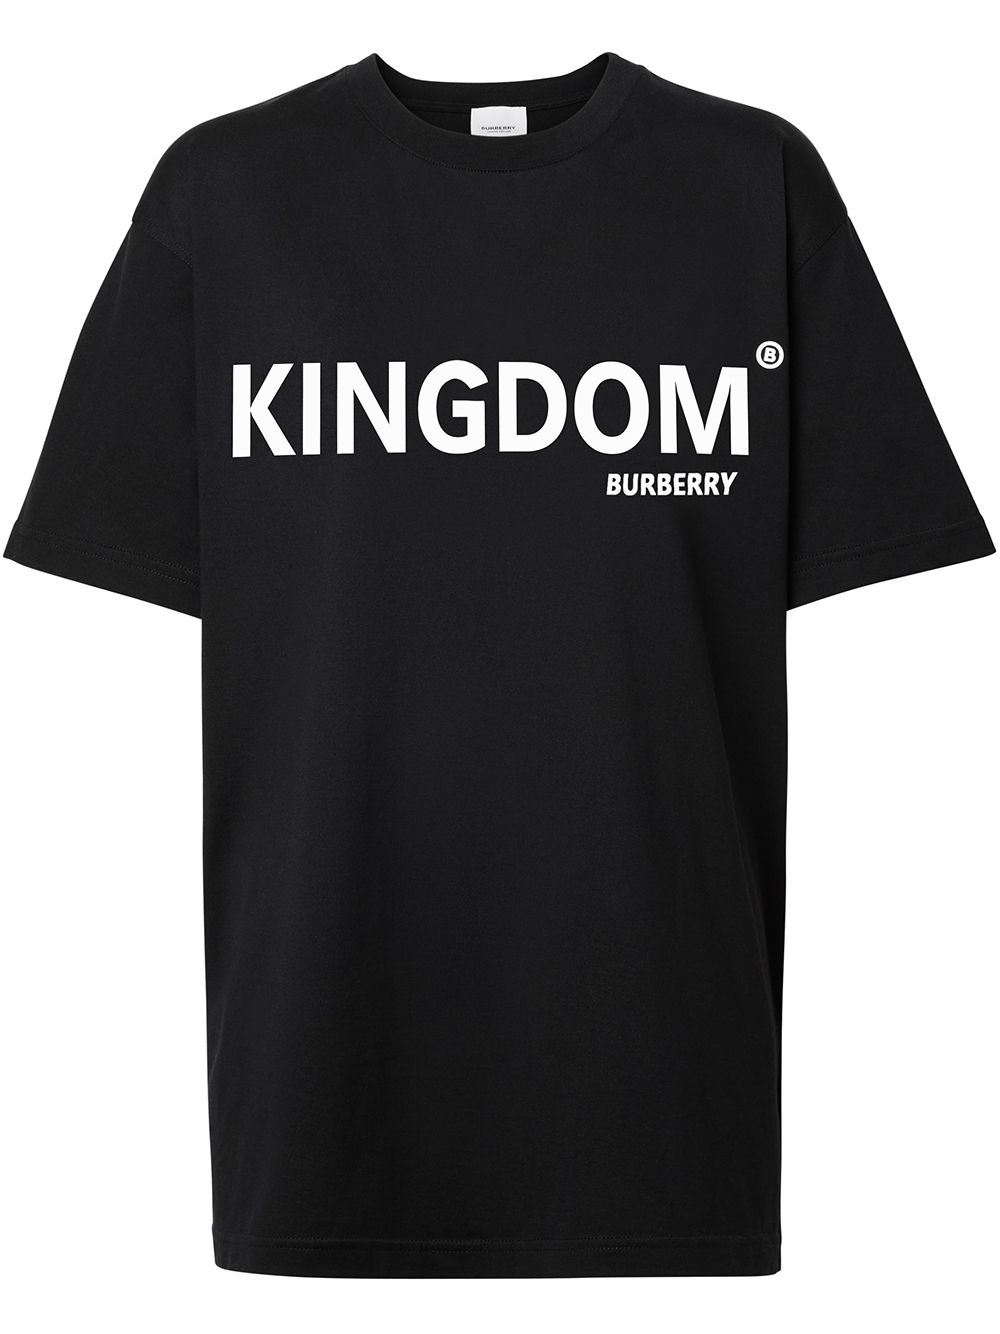 kingdom burberry